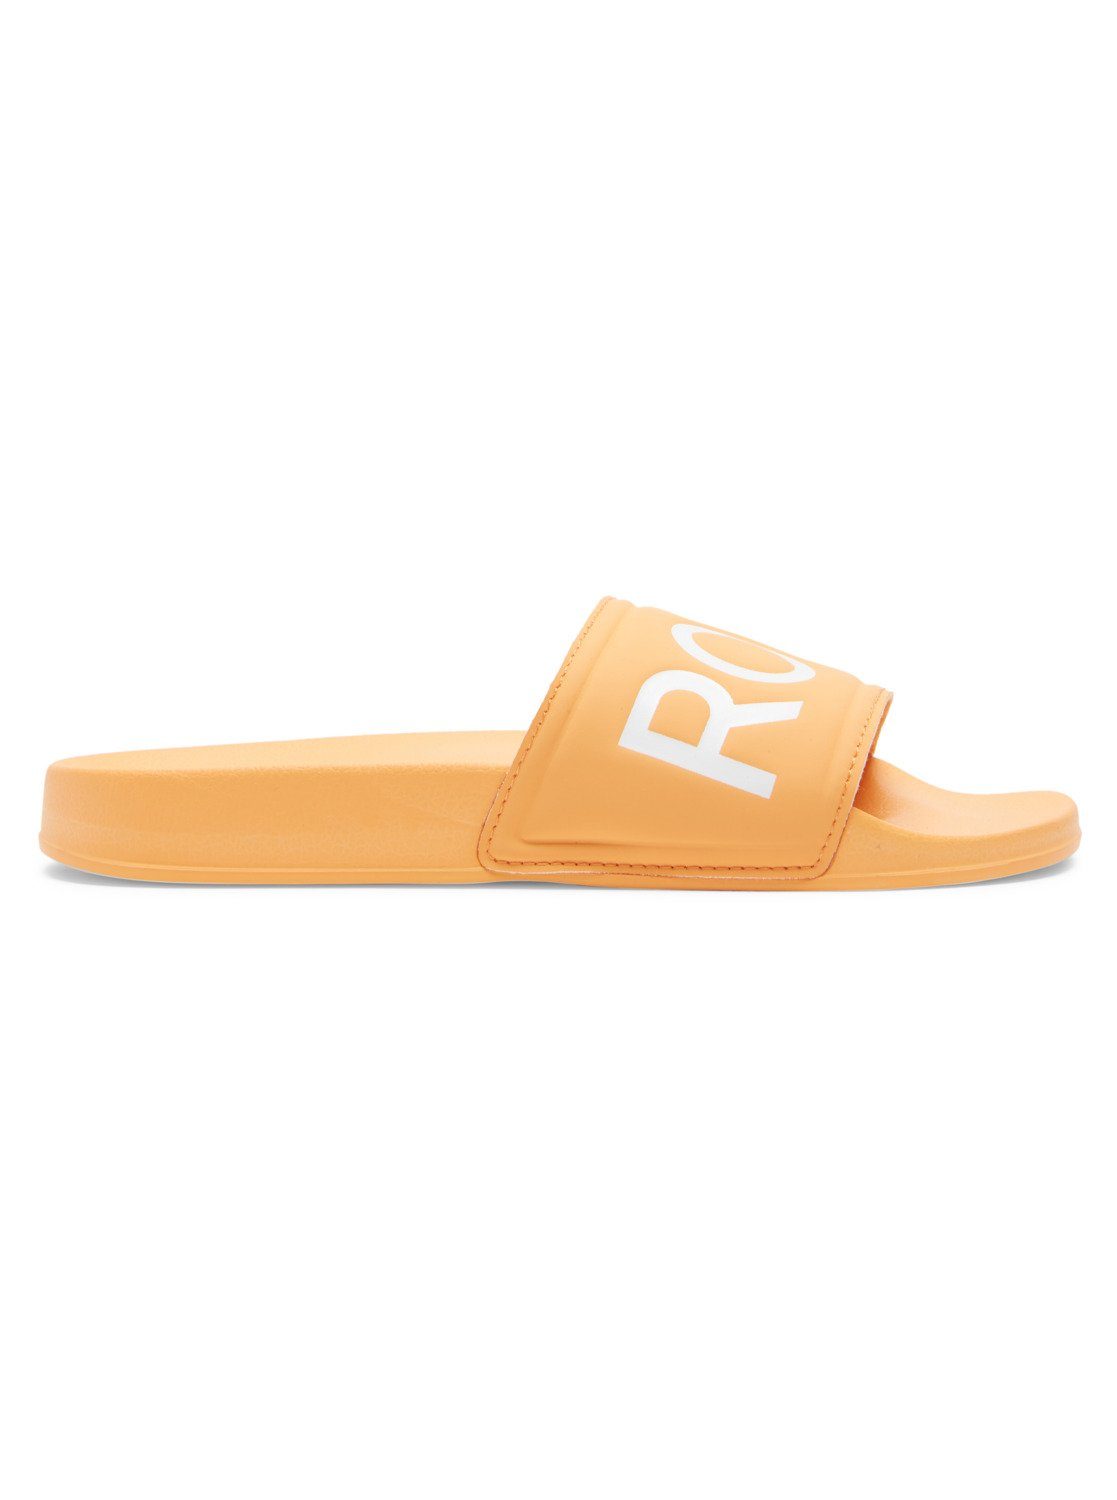 Roxy Slippy Sandale Classic Orange